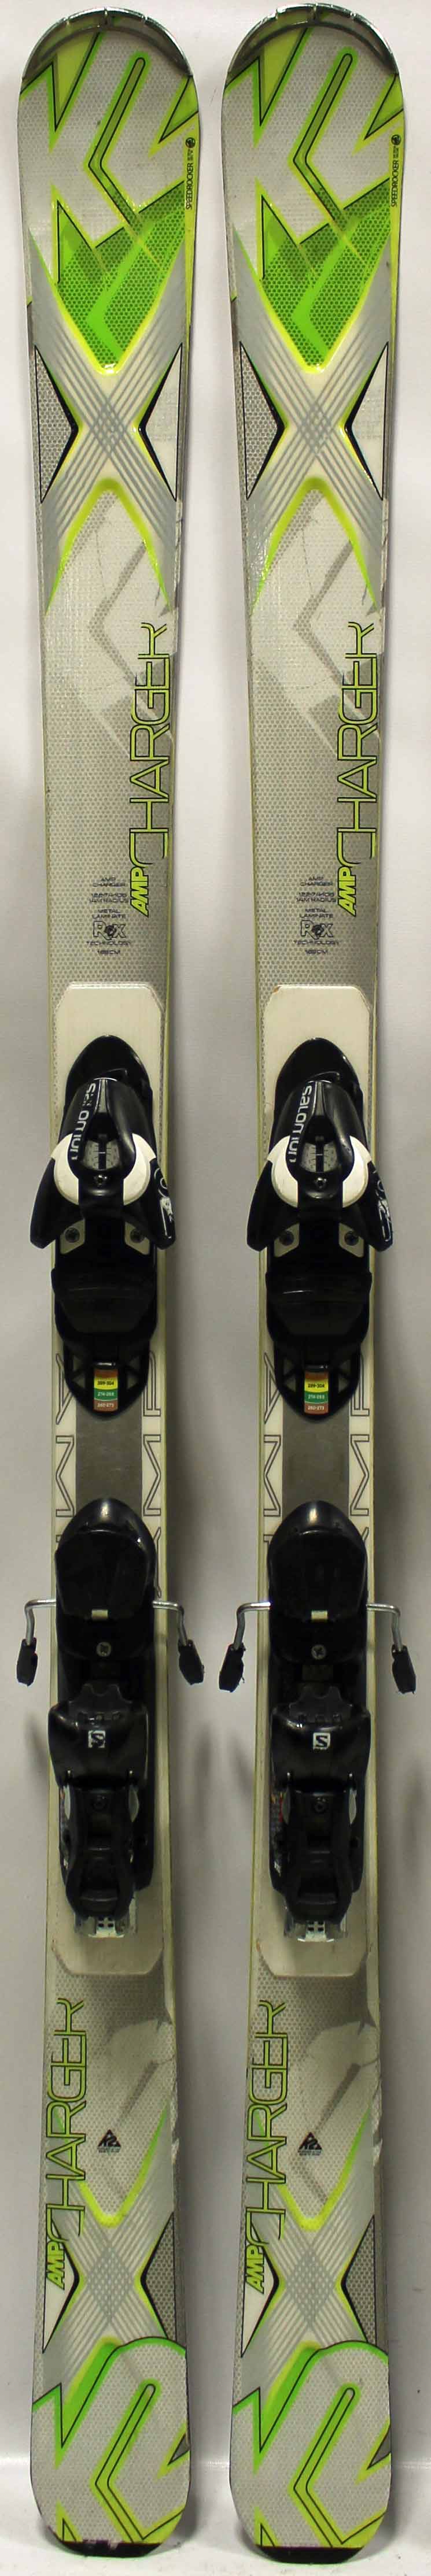 2015, K2, Amp Charger Skis with Salomon Z10 Demo Bindings Used Demo Skis  165cm